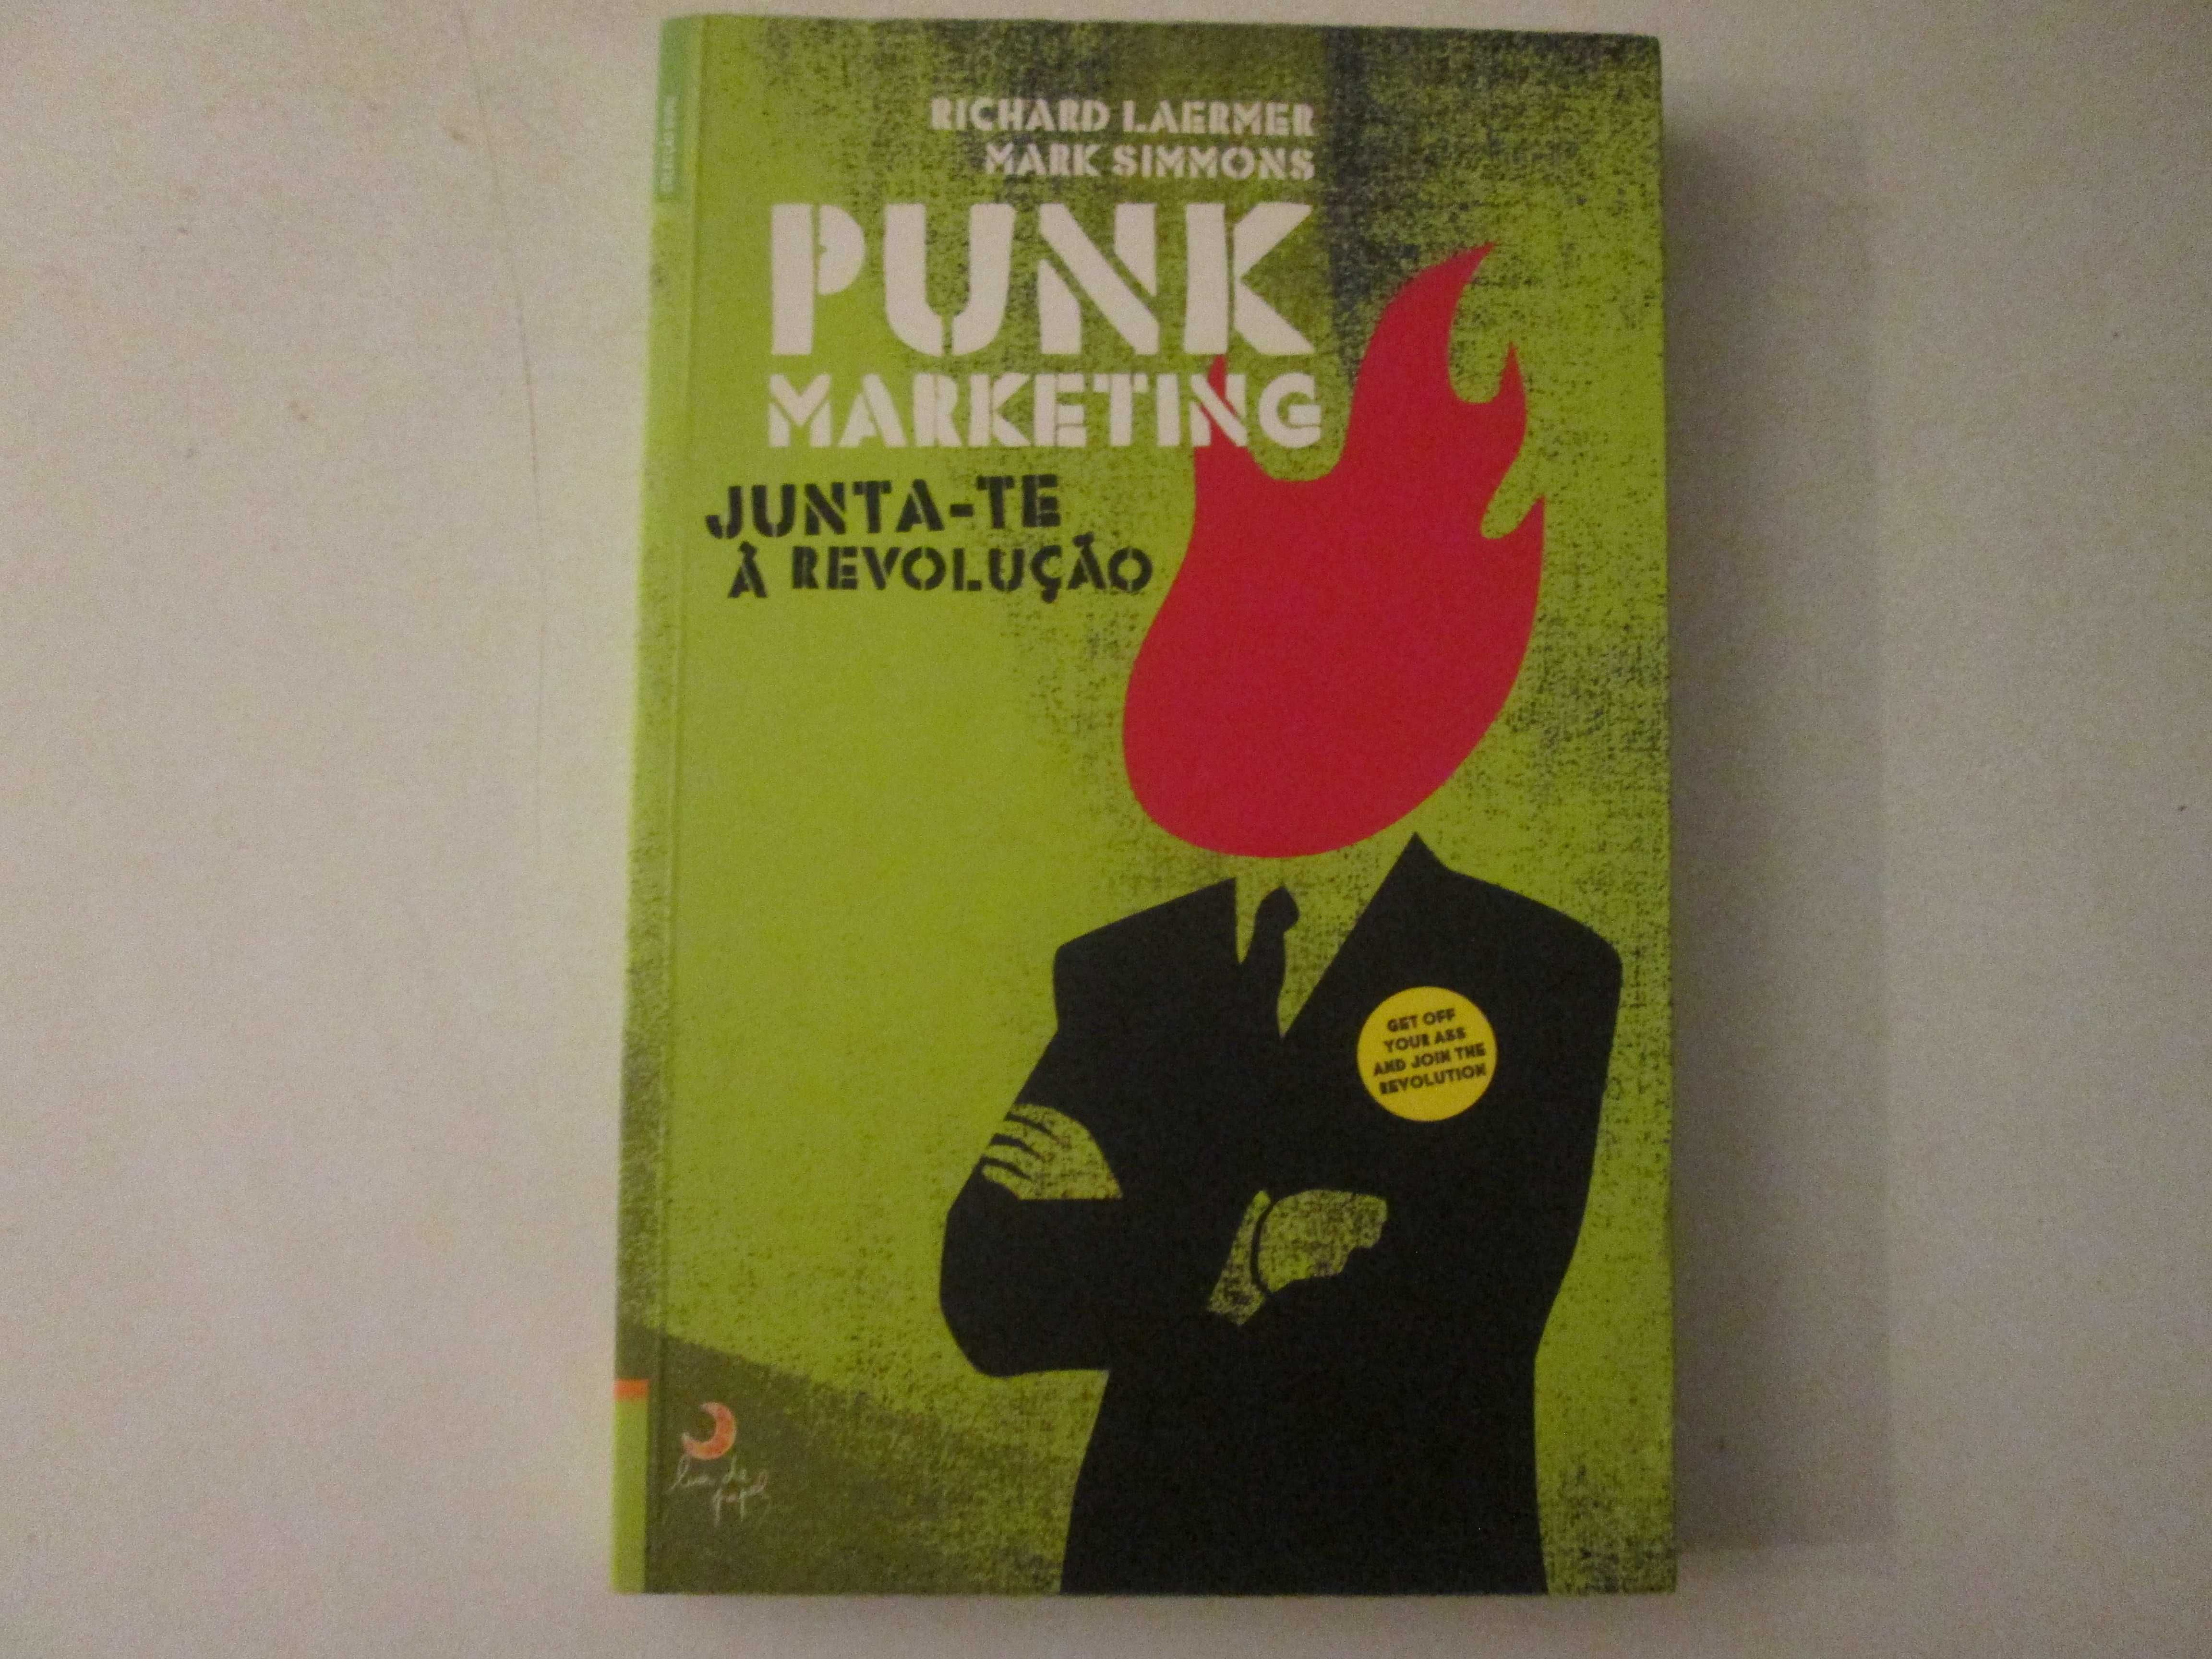 Punk marketing- Richard Laermer e Mark Simmons